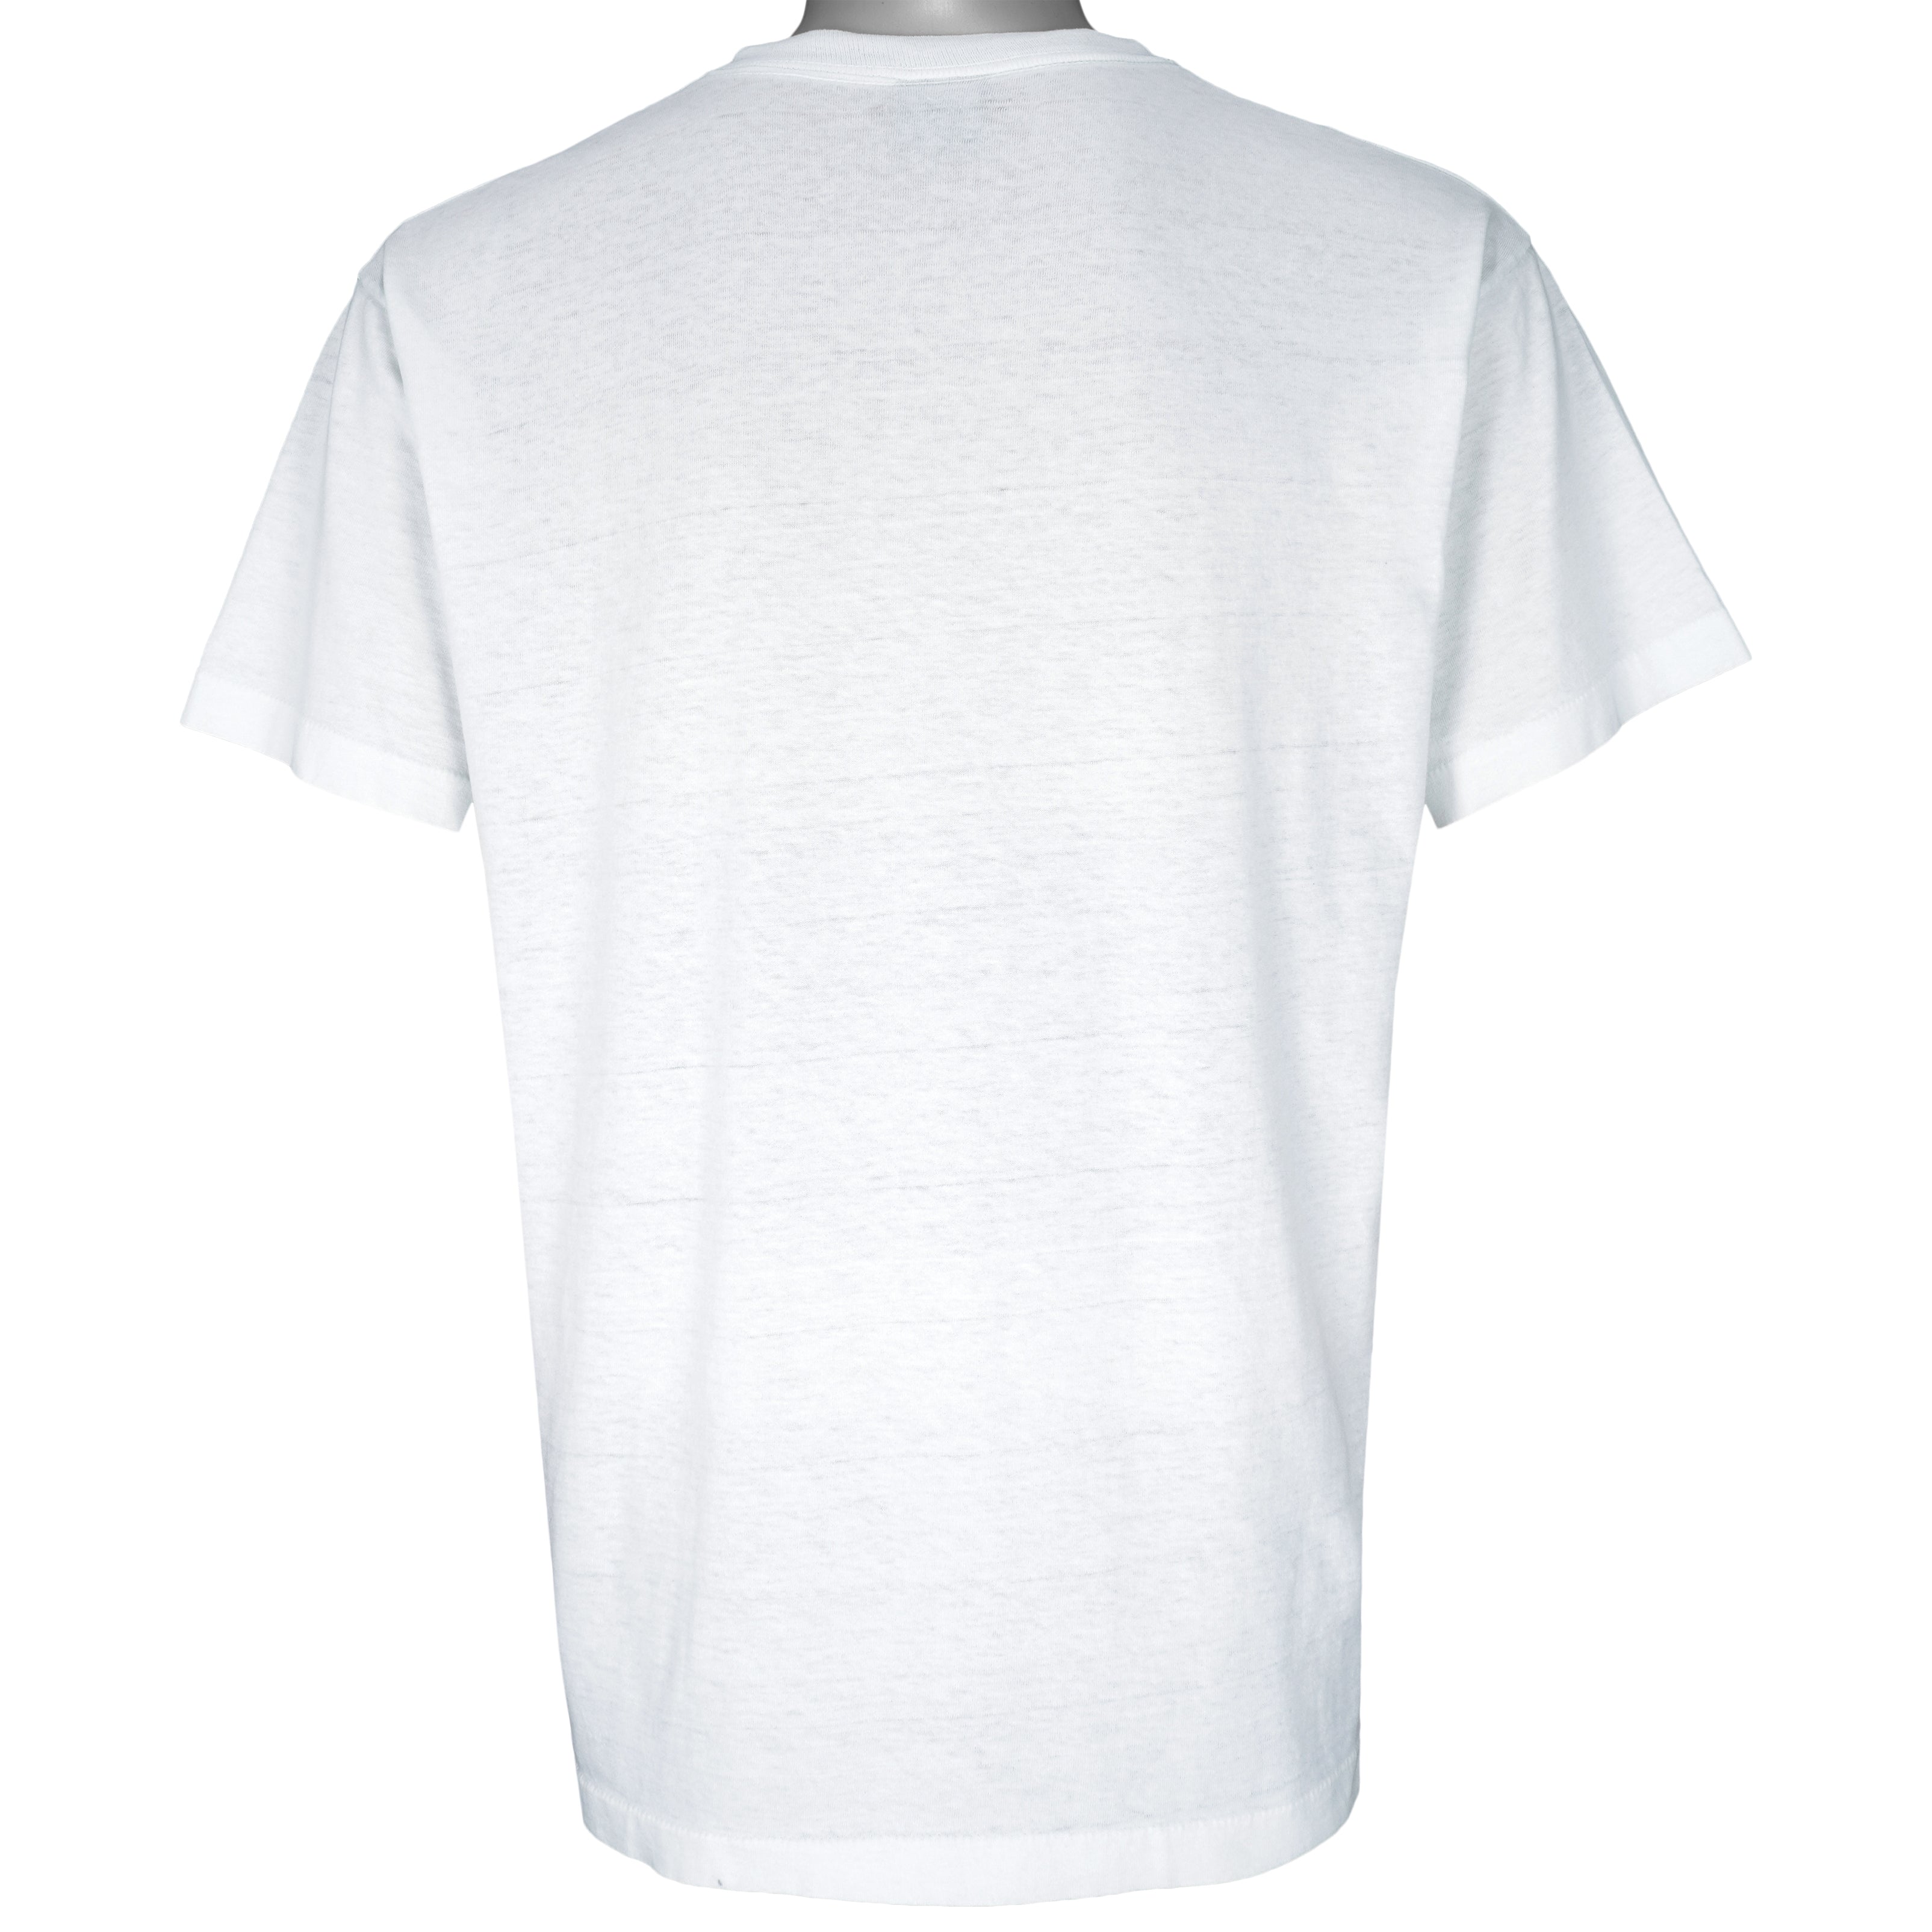 VTG Atlanta Braves Baseball Pro Player XL Tee Shirt Embroidered 90s